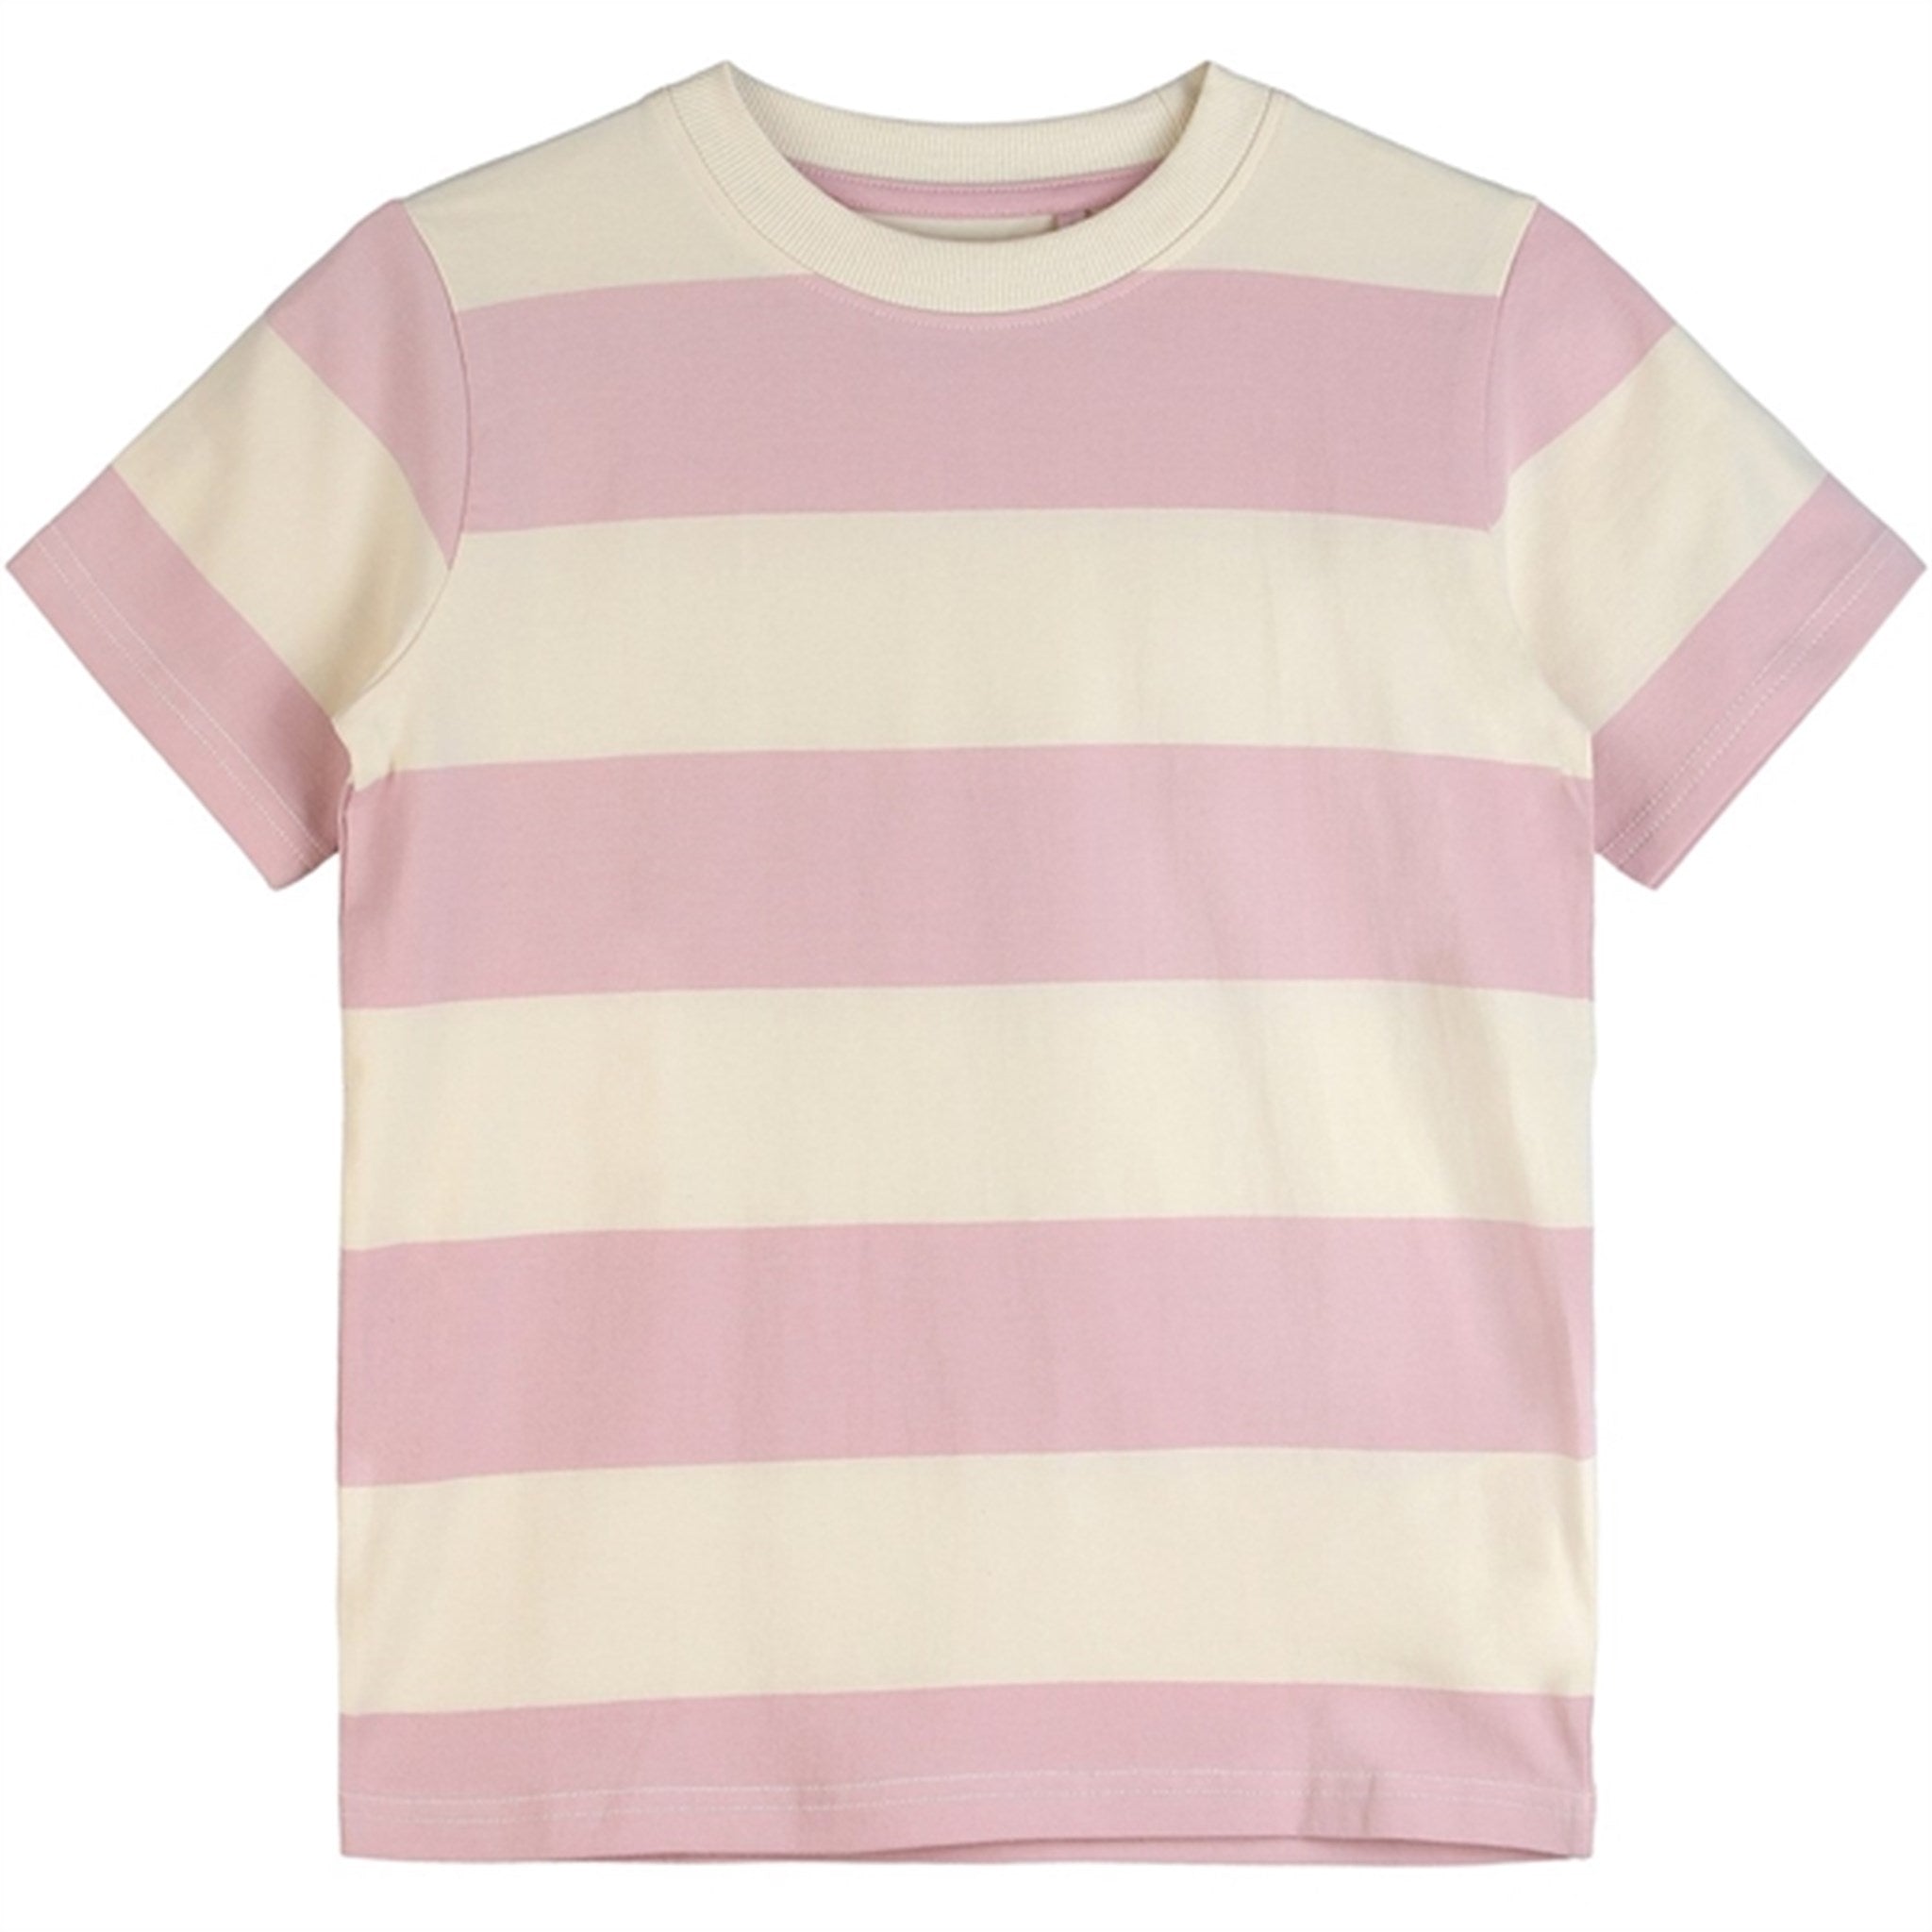 The New Pink Nectar Jae T-shirt